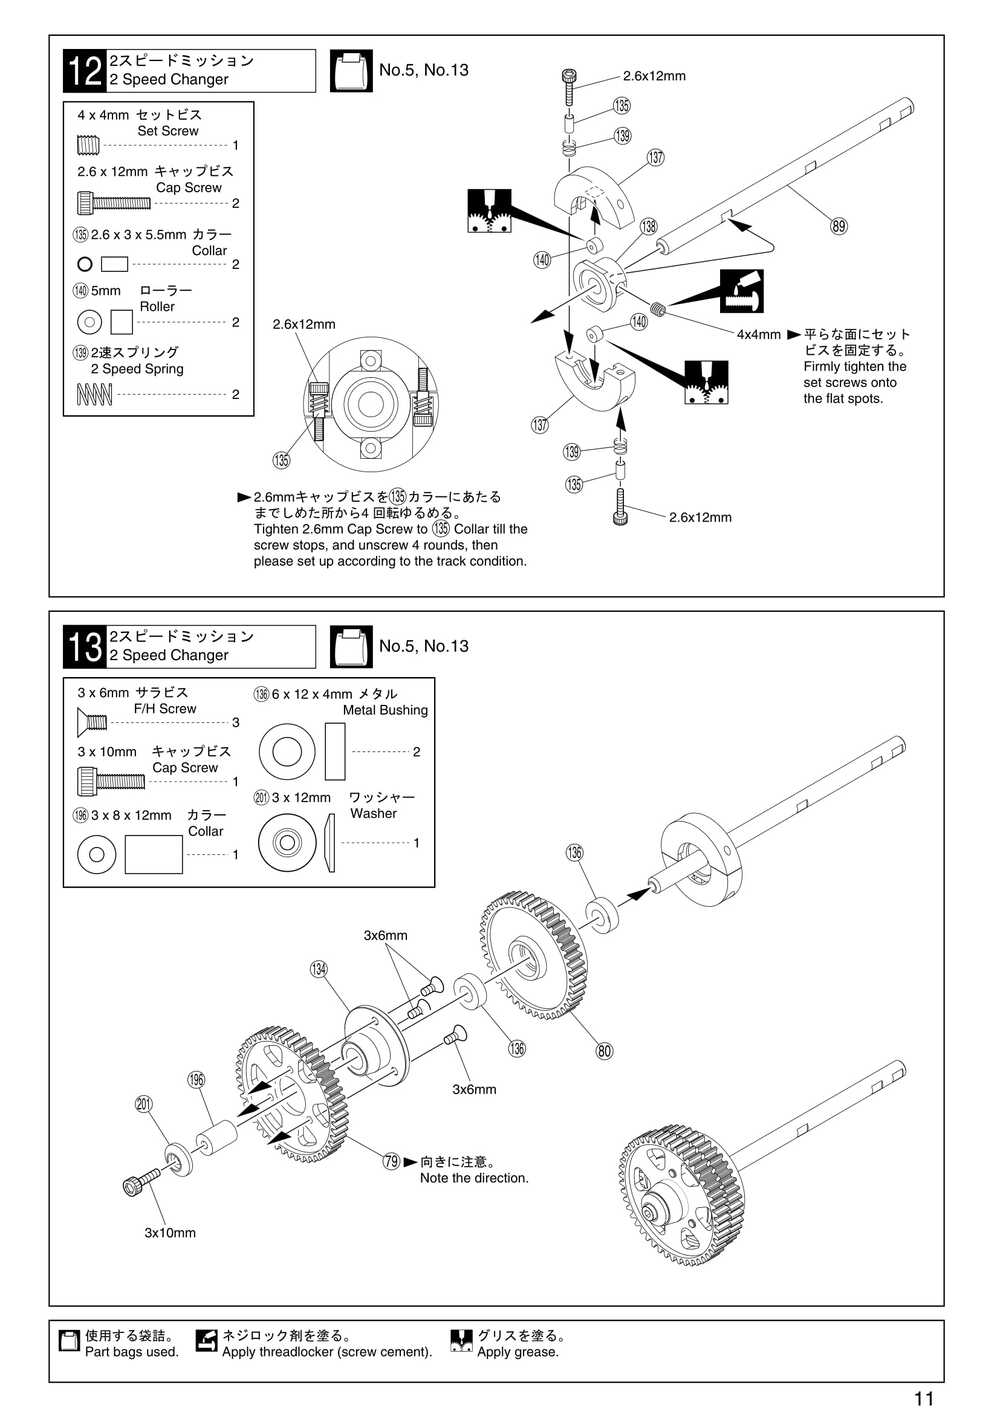 Kyosho - 31041 - Fantom Sports - Manual - Page 11